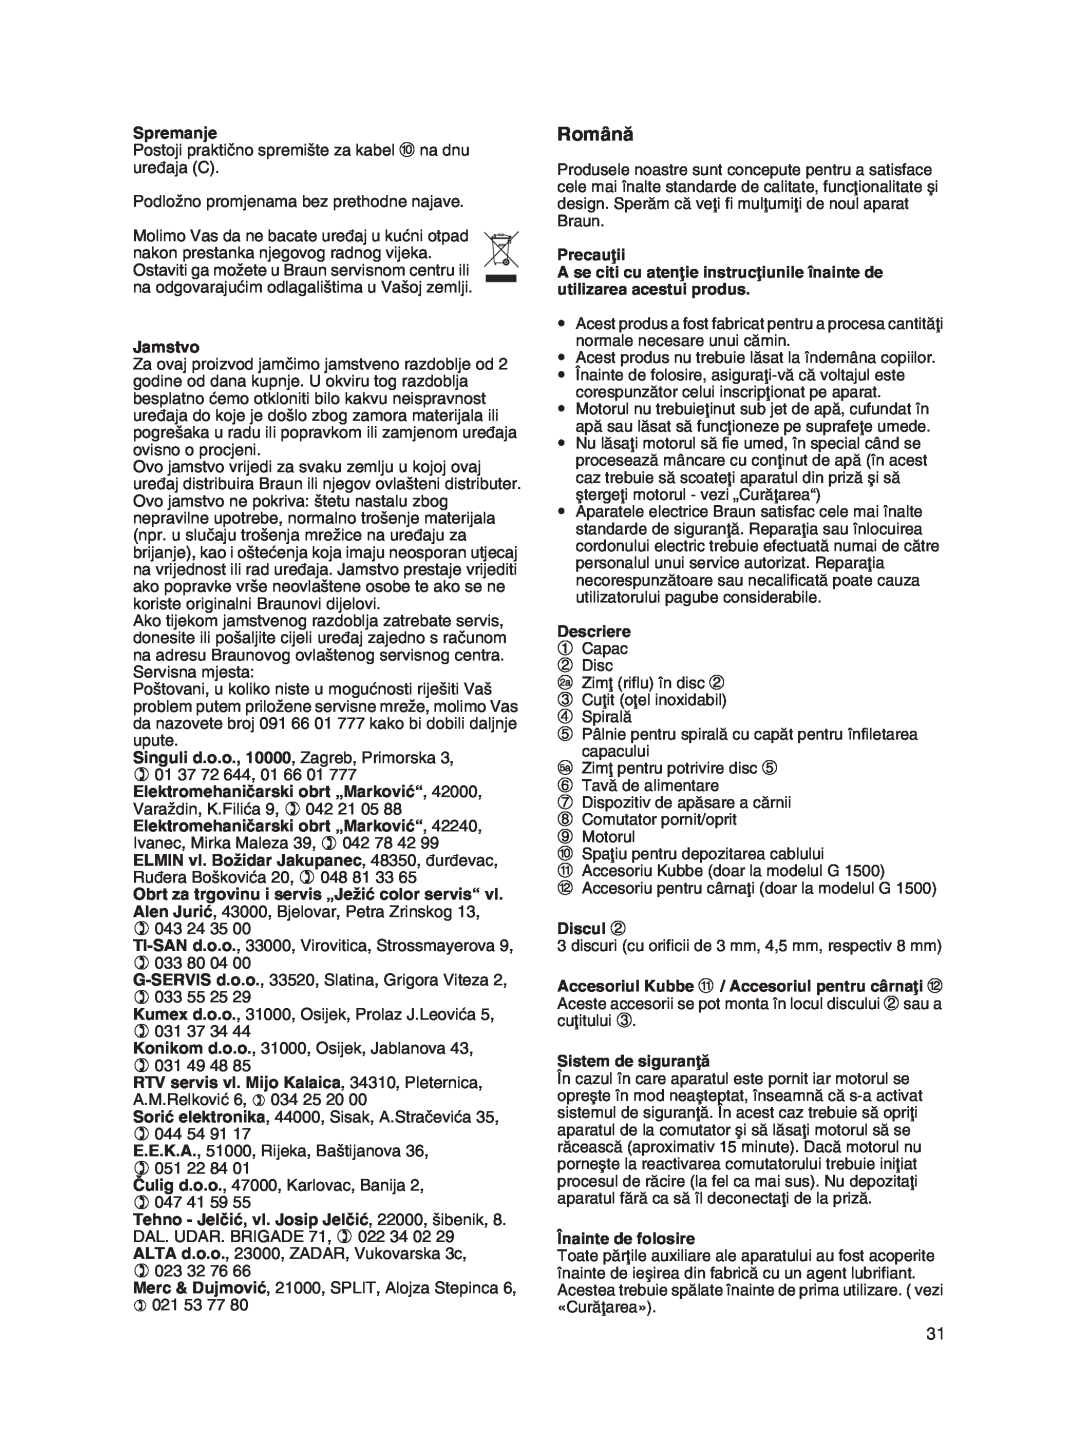 Braun G 1500 manual Românå, Spremanje, Jamstvo, Elektromehaniãarski obrt „Markoviç“, Precauøii, Descriere, Discul 